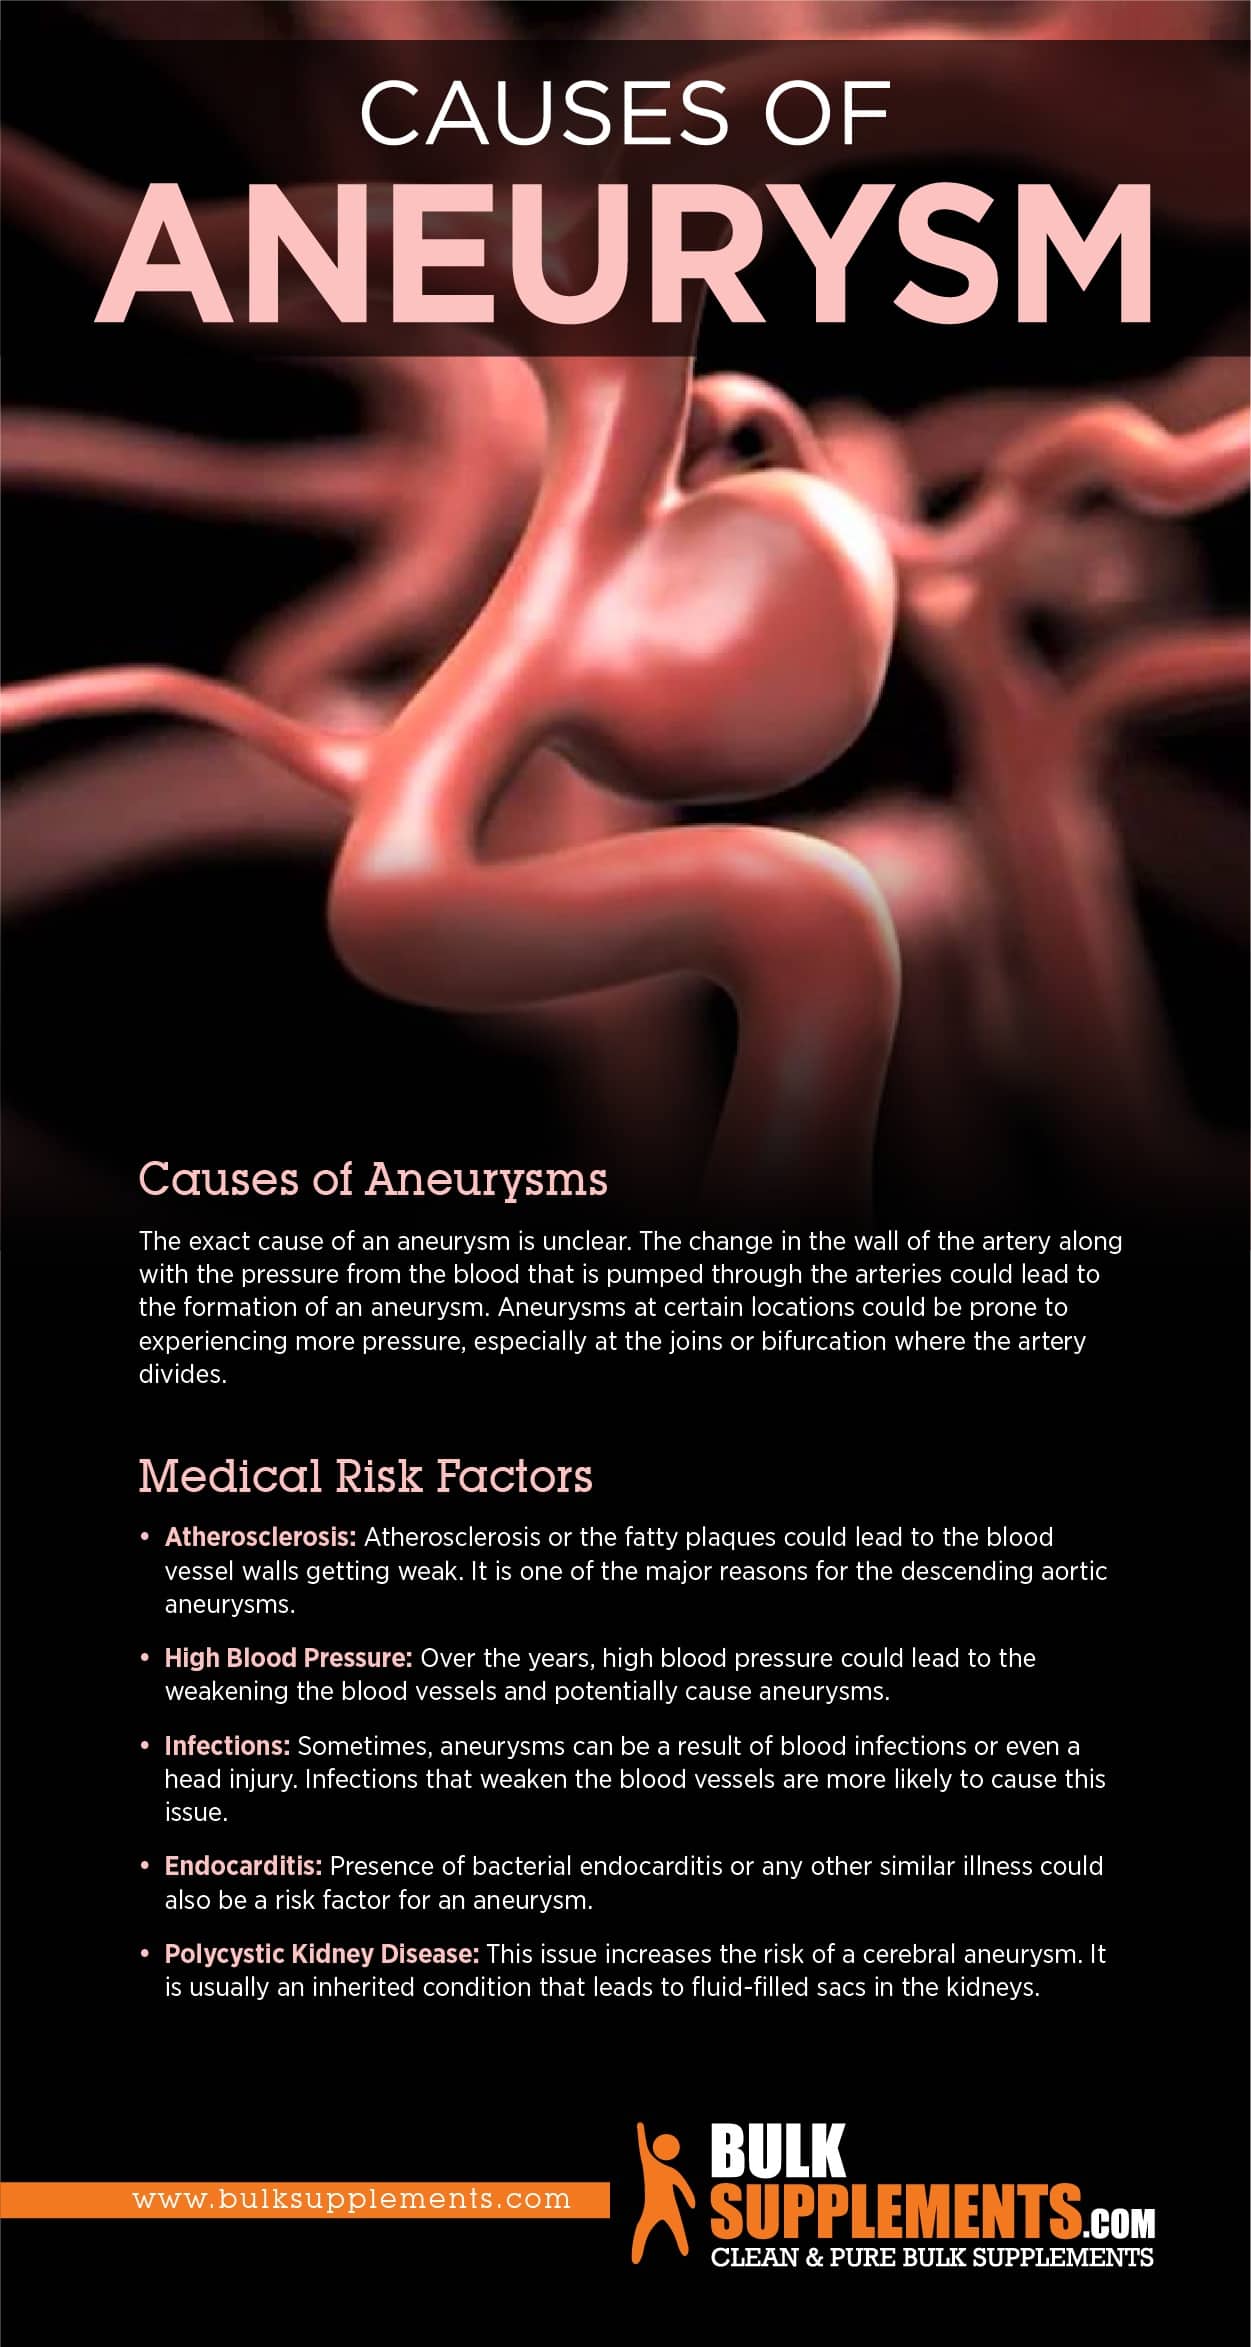 Causes of Aneurysm